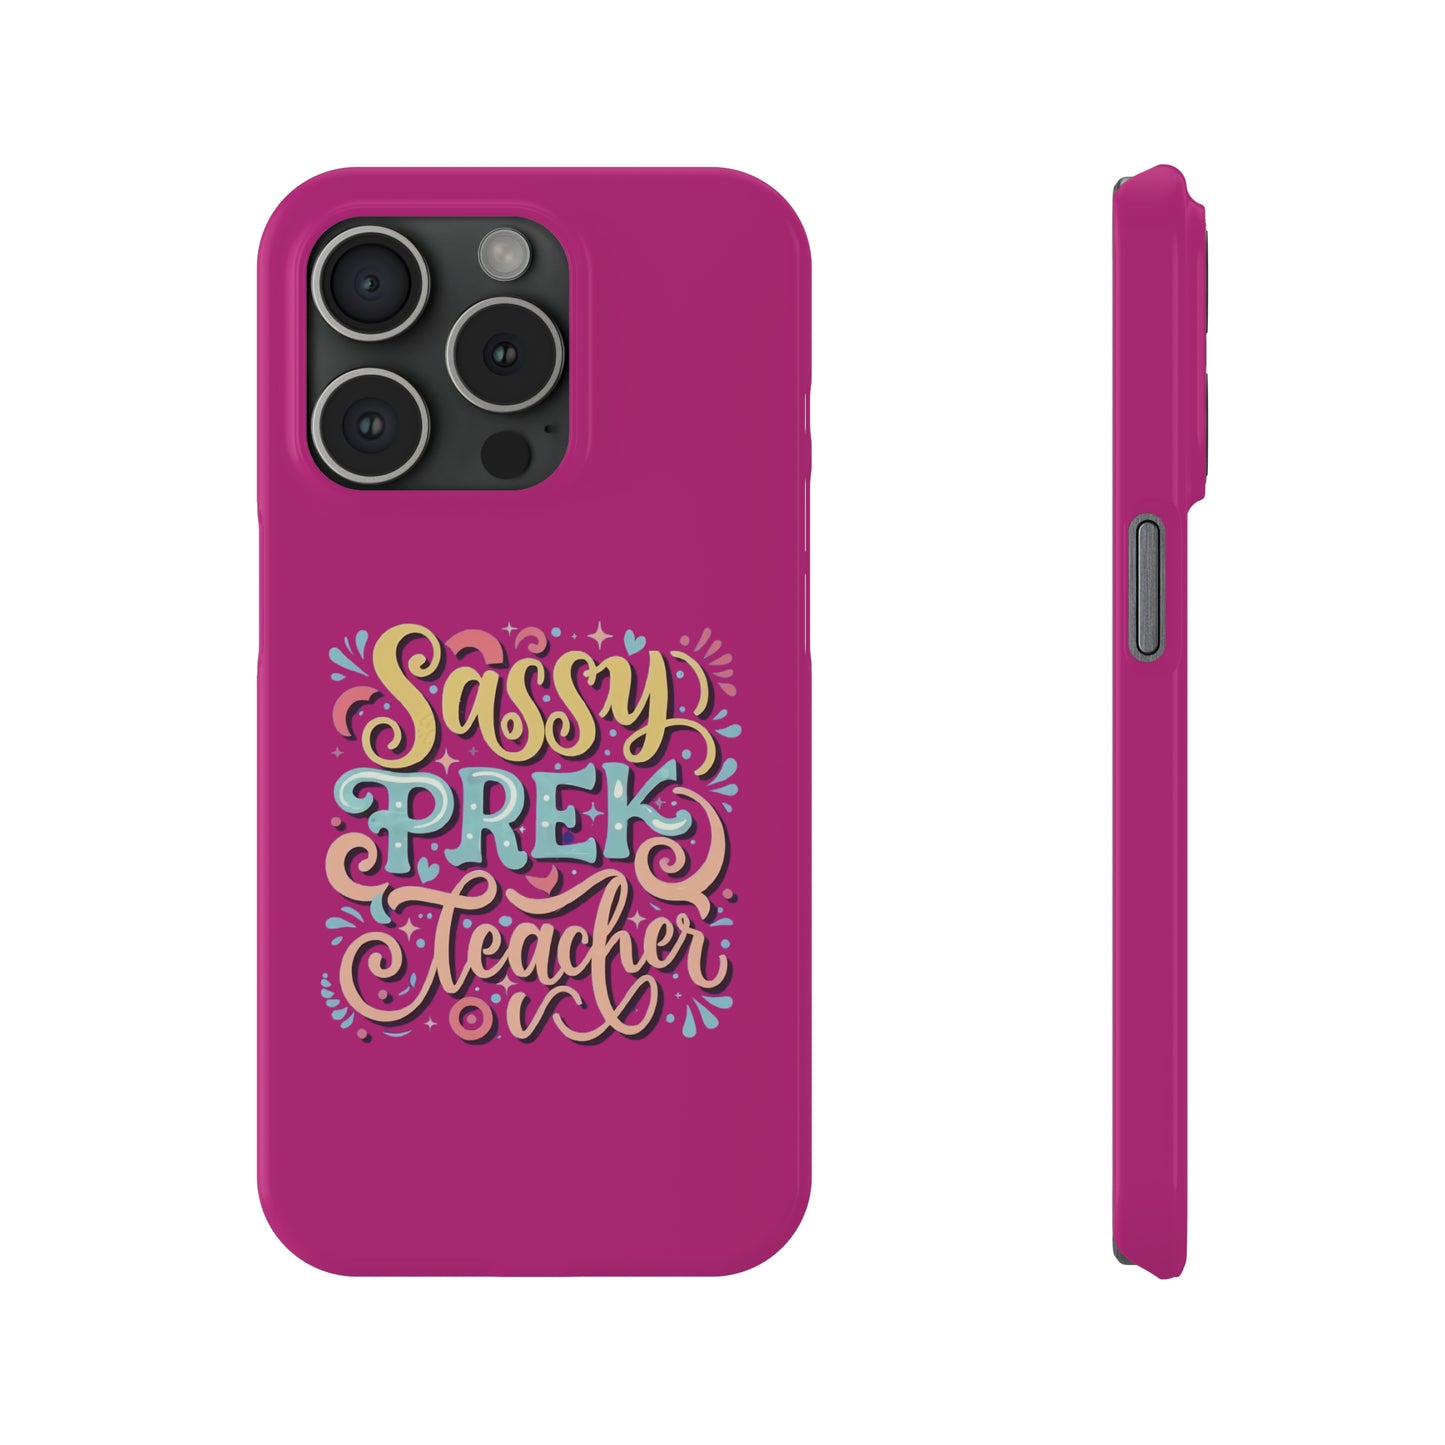 PreK Teacher Slim Phone Case - "Sassy PreK Teacher"